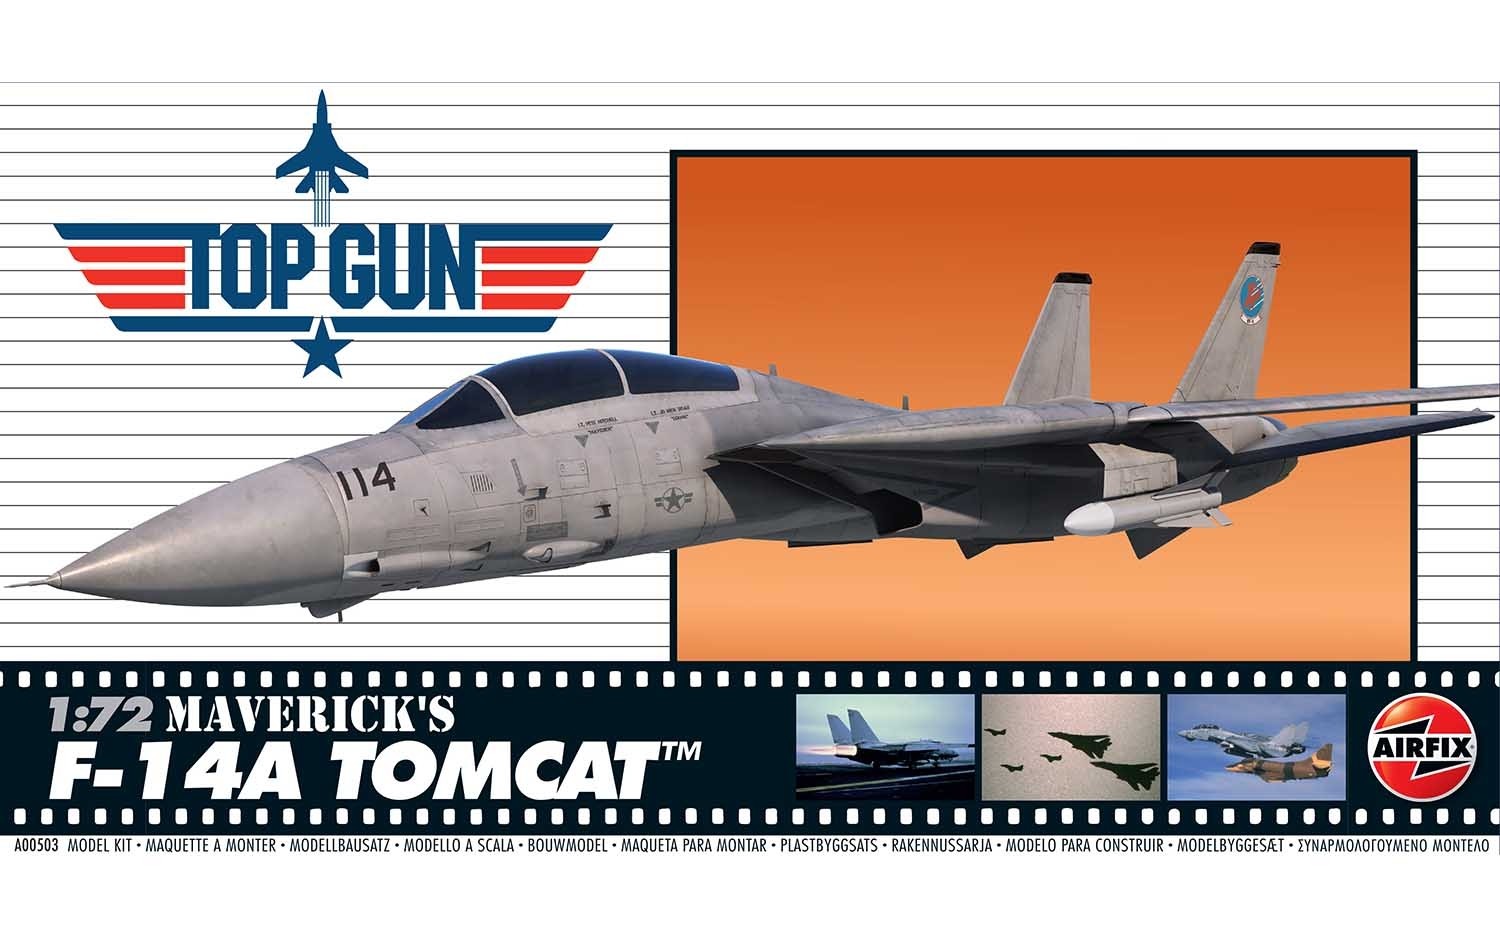 Top Gun Maverick's F-14A Tomcat